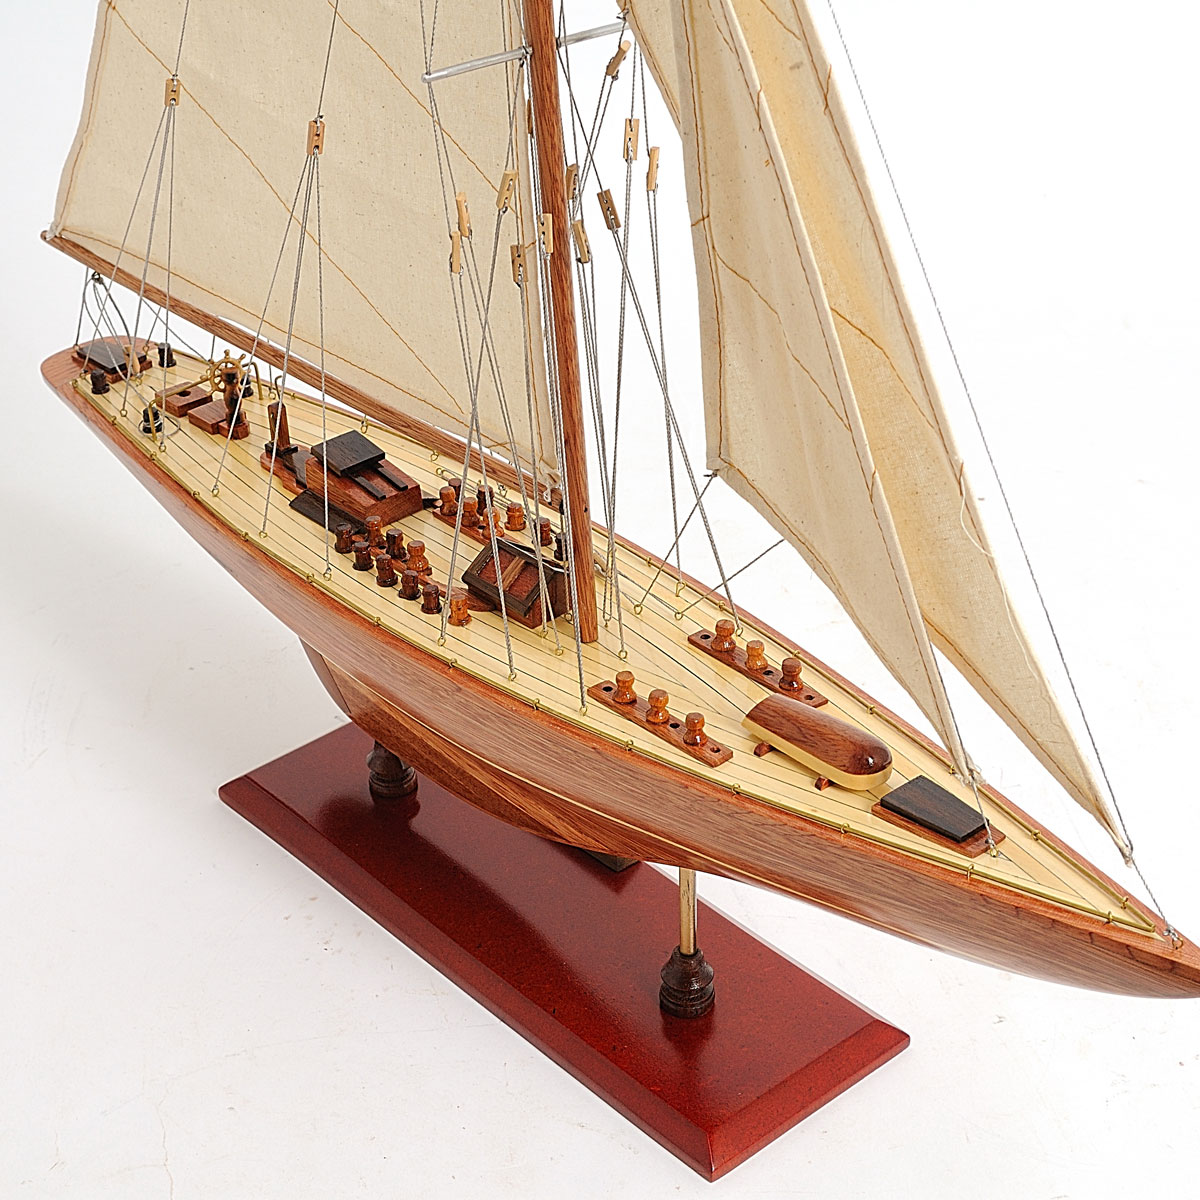 20" Endeavour Sailing Boat Model